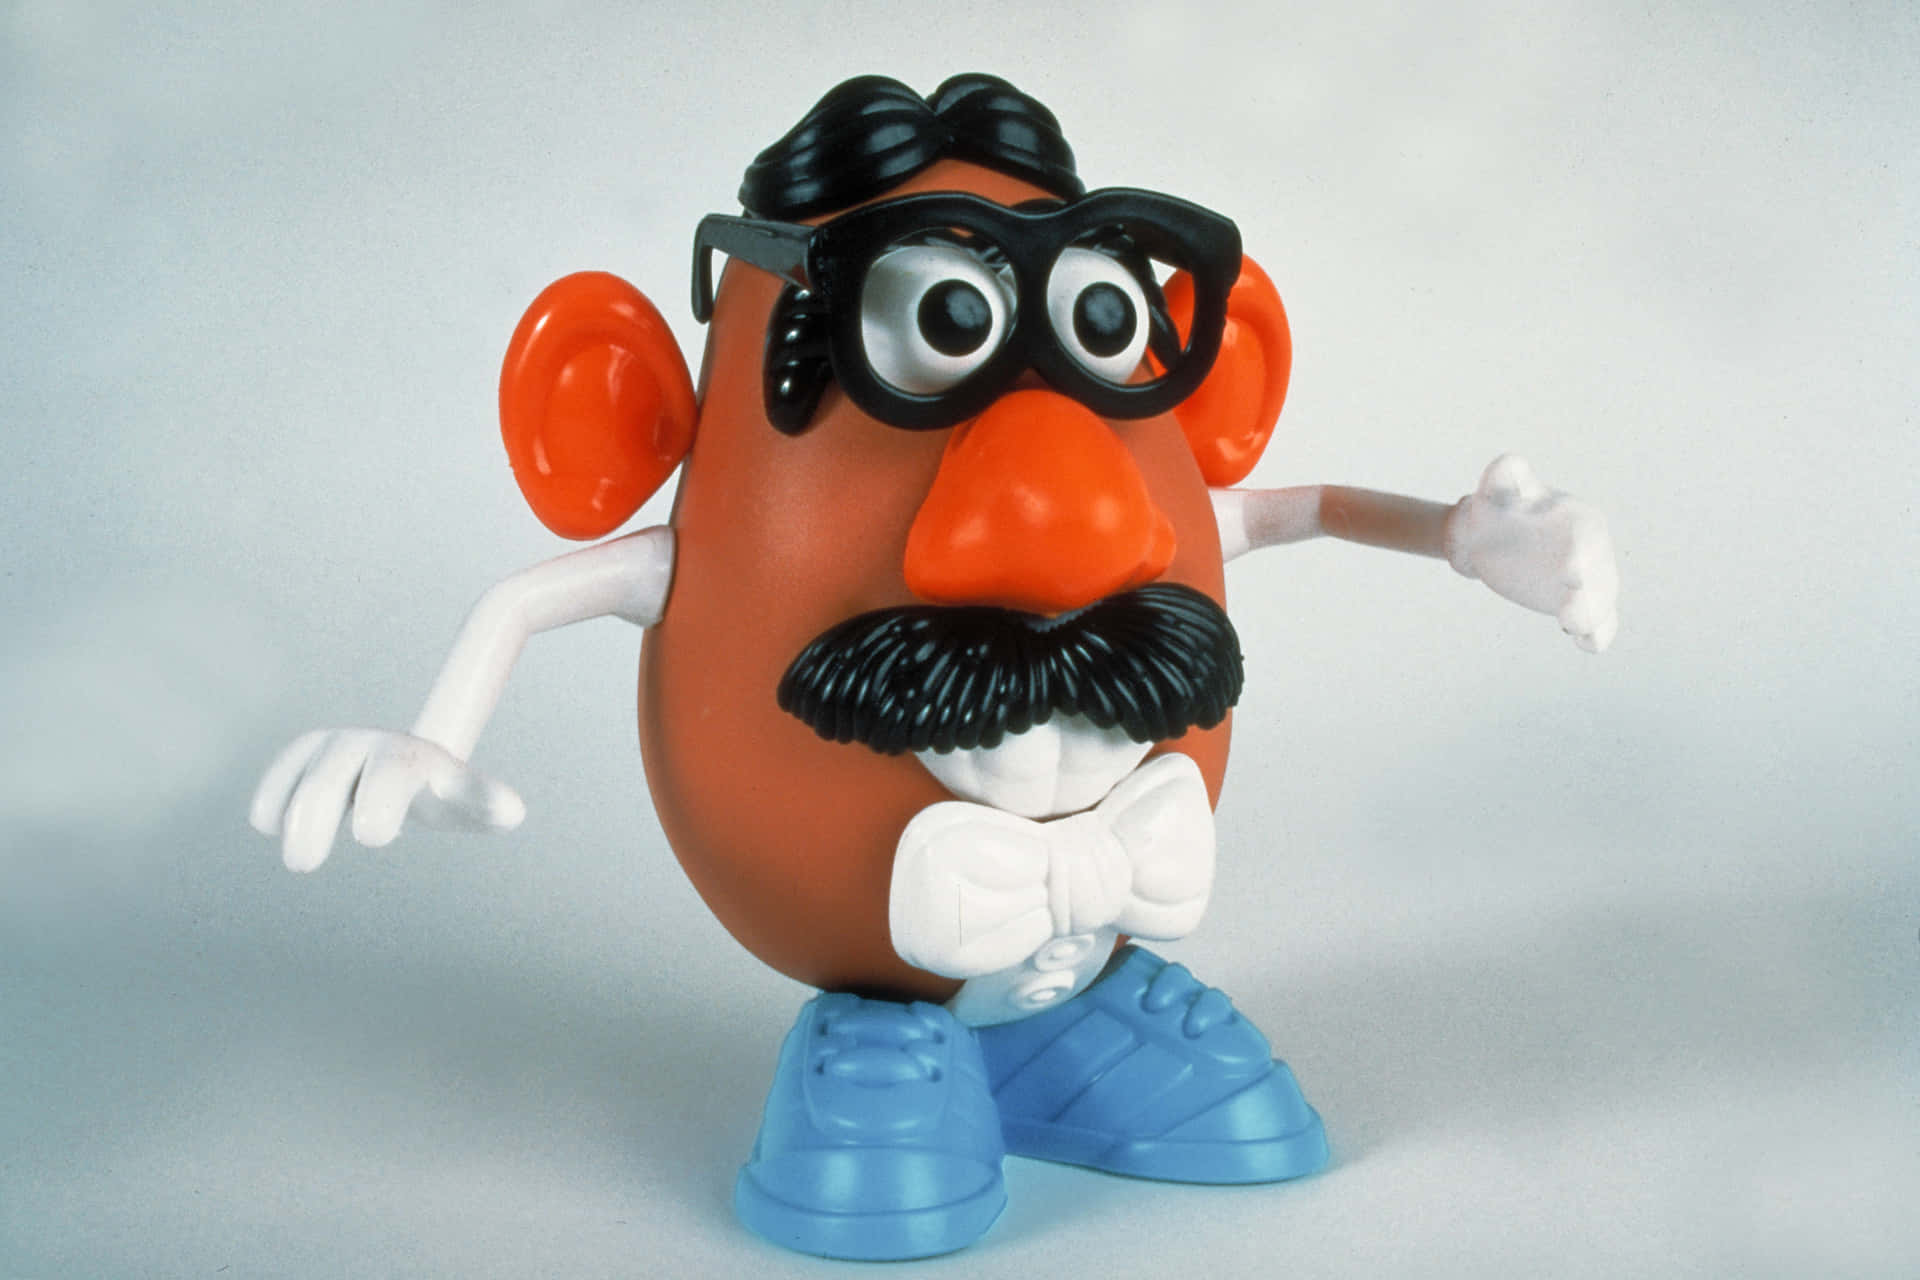 "Mr Potato Head – the star of the spud-tacular show!"